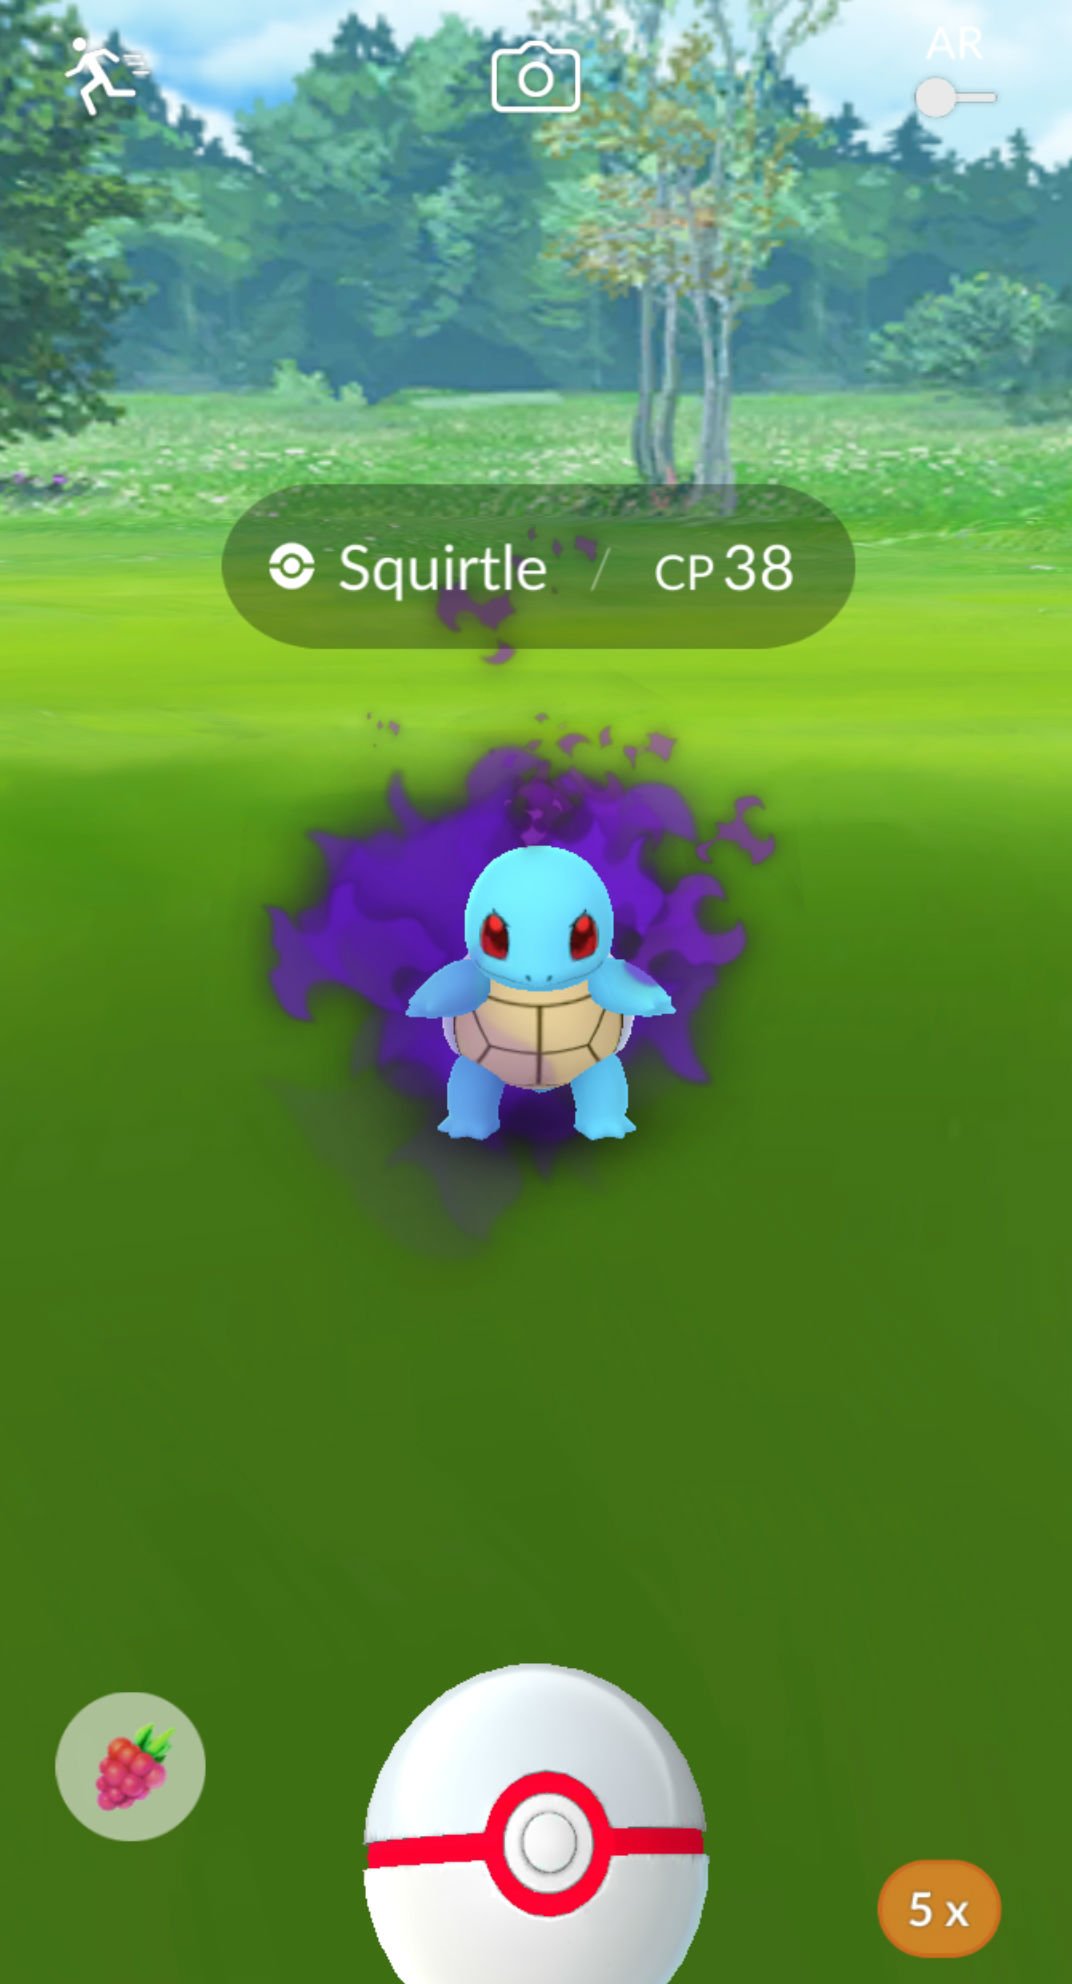 Attrape Pokemon Go Shadow Squirtle